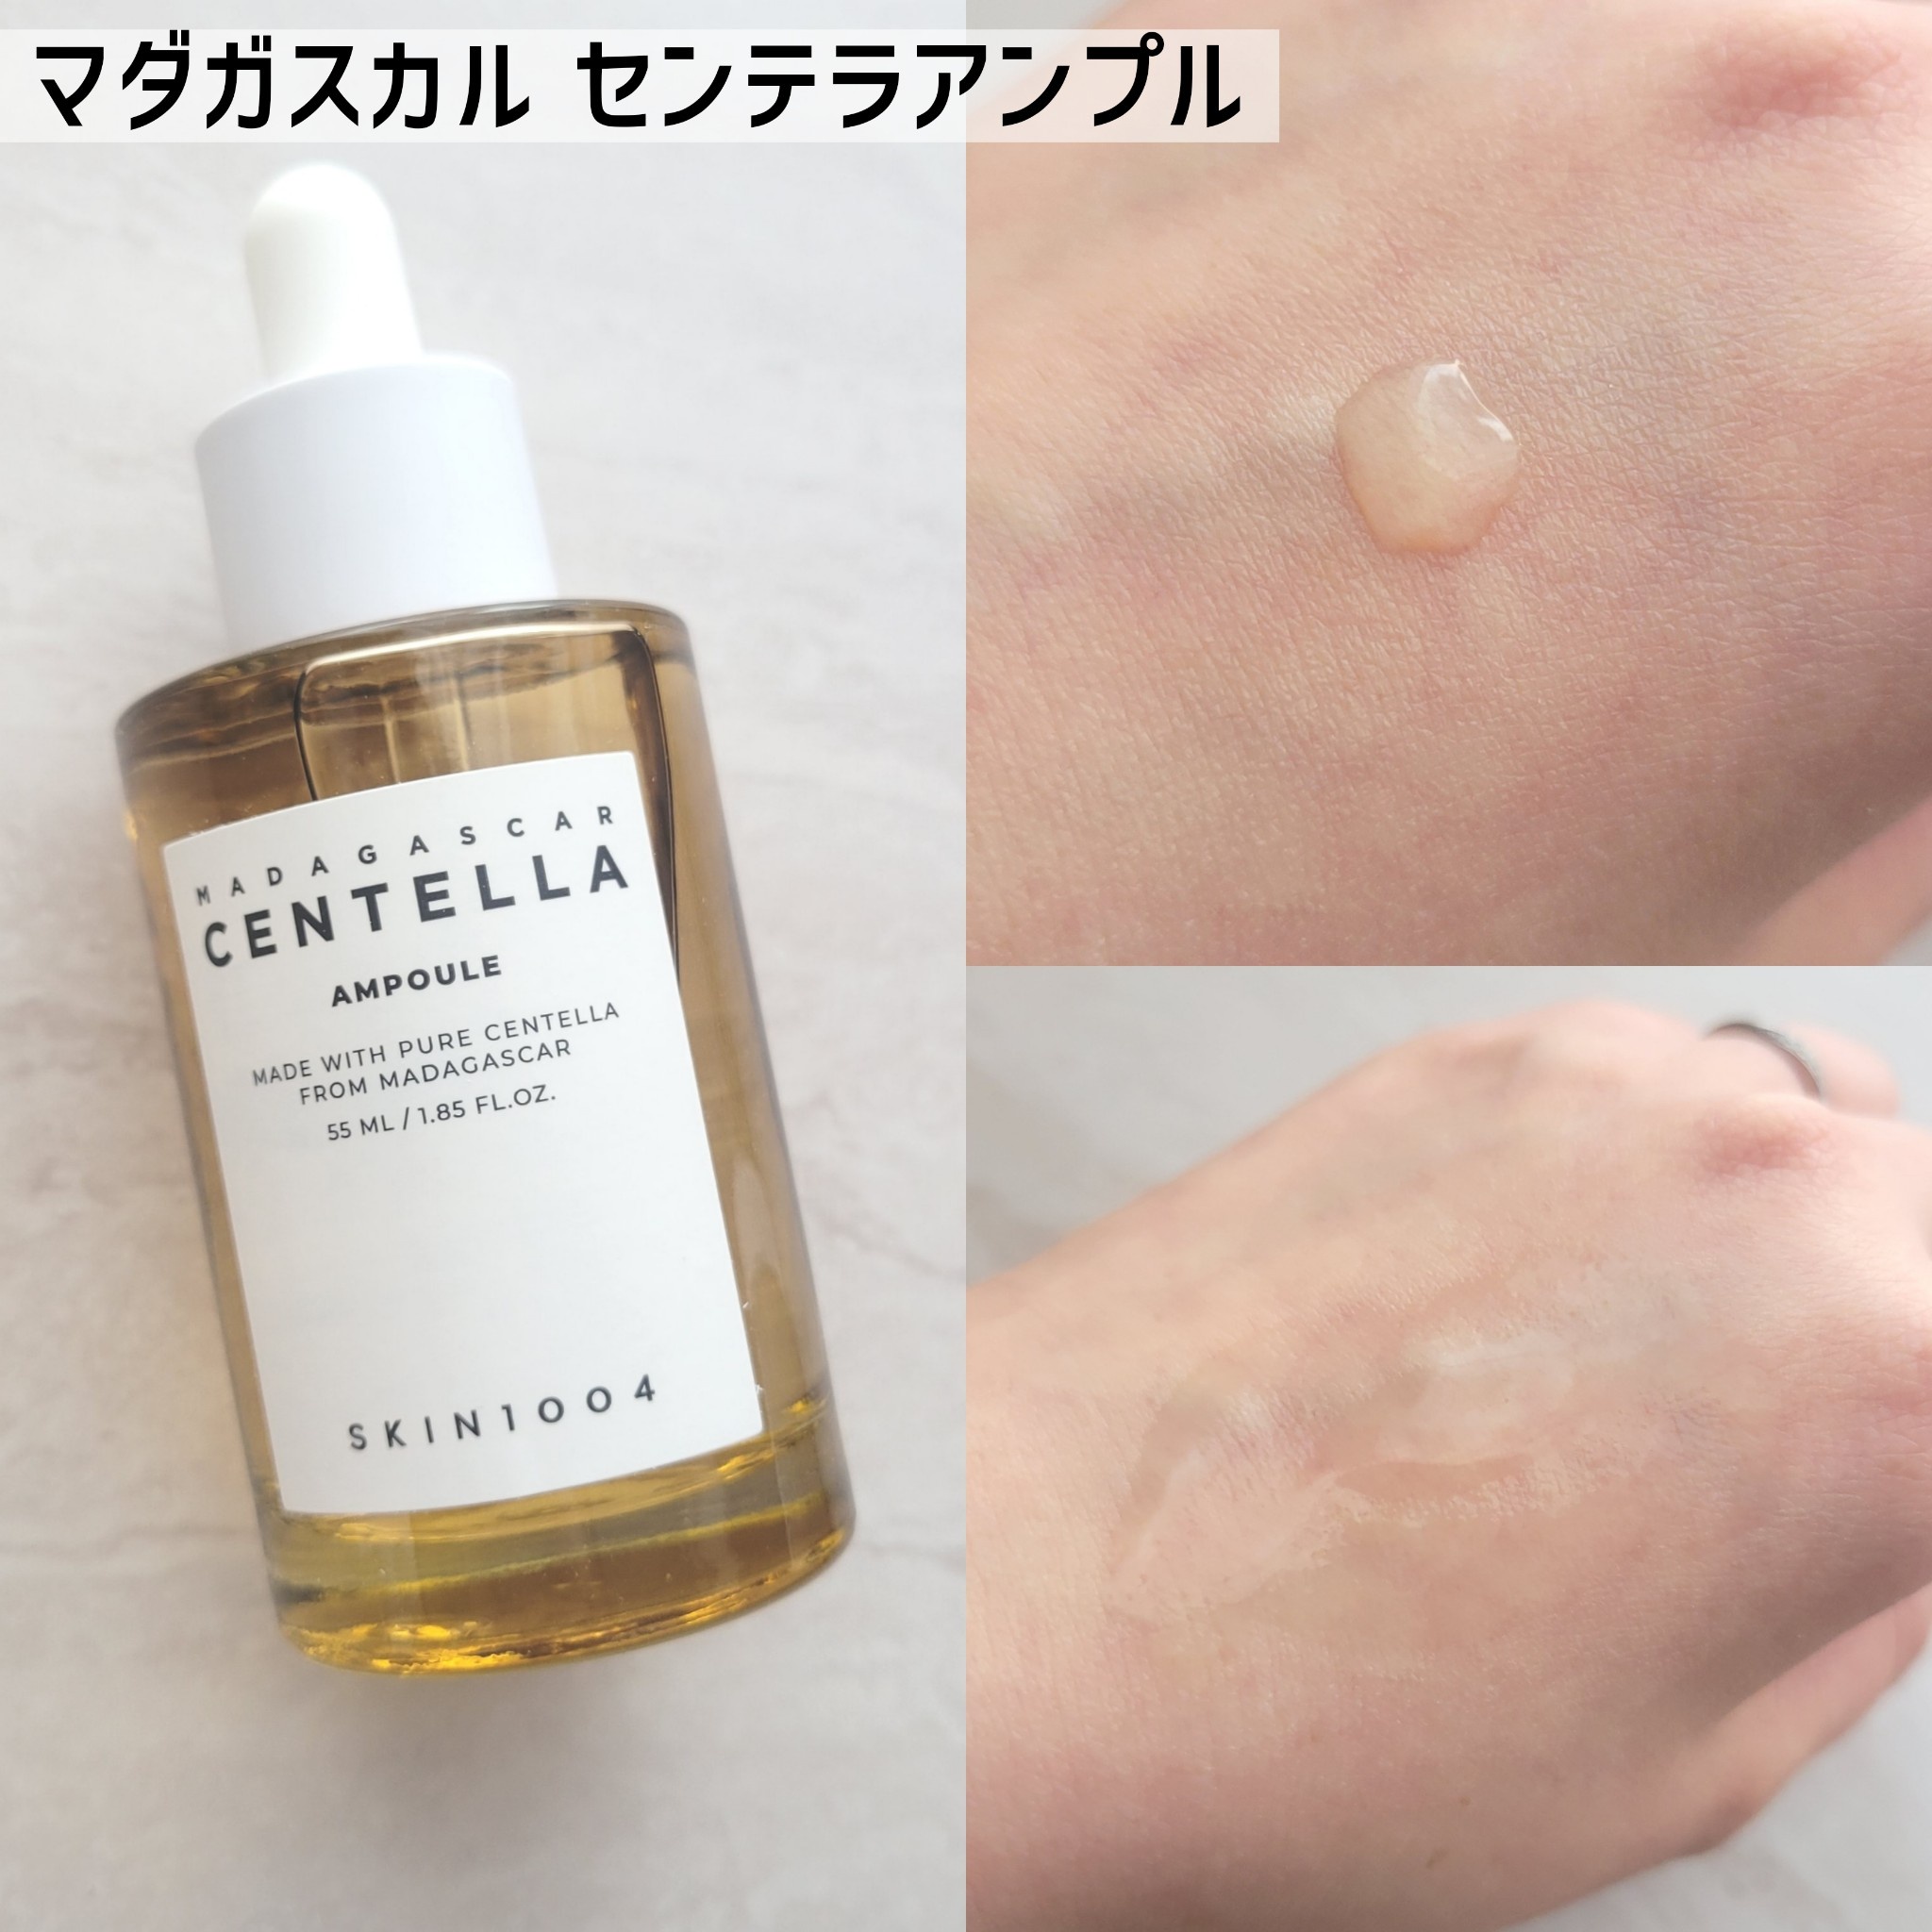 Skin1004 センテラ アンプル マダガスカル シカ センテラアンプル 基礎化粧品 | haizi.jp